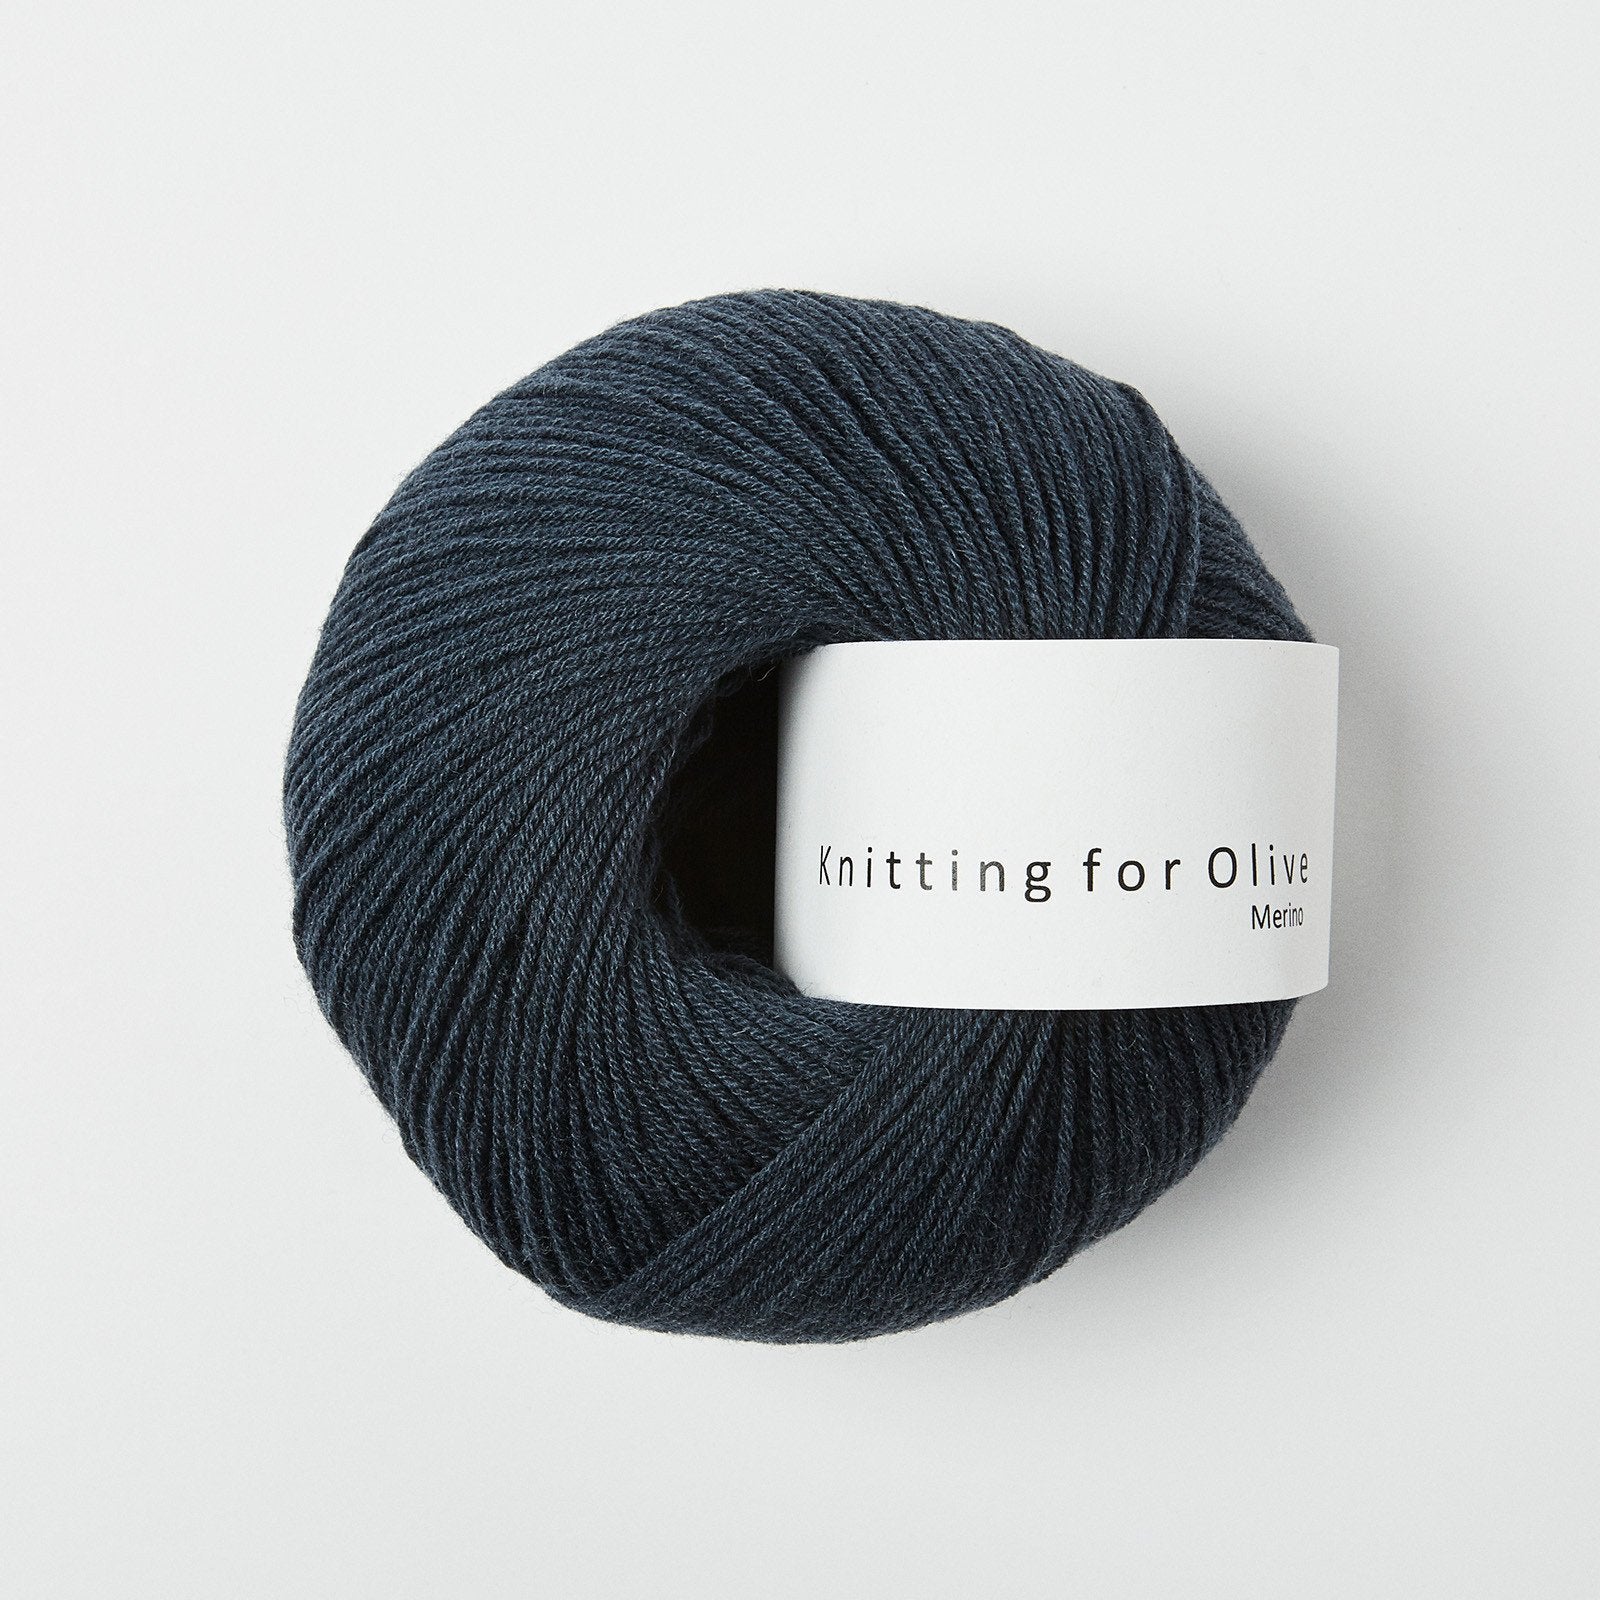 Knitting_for_olive_merino_dybpetroliumsb